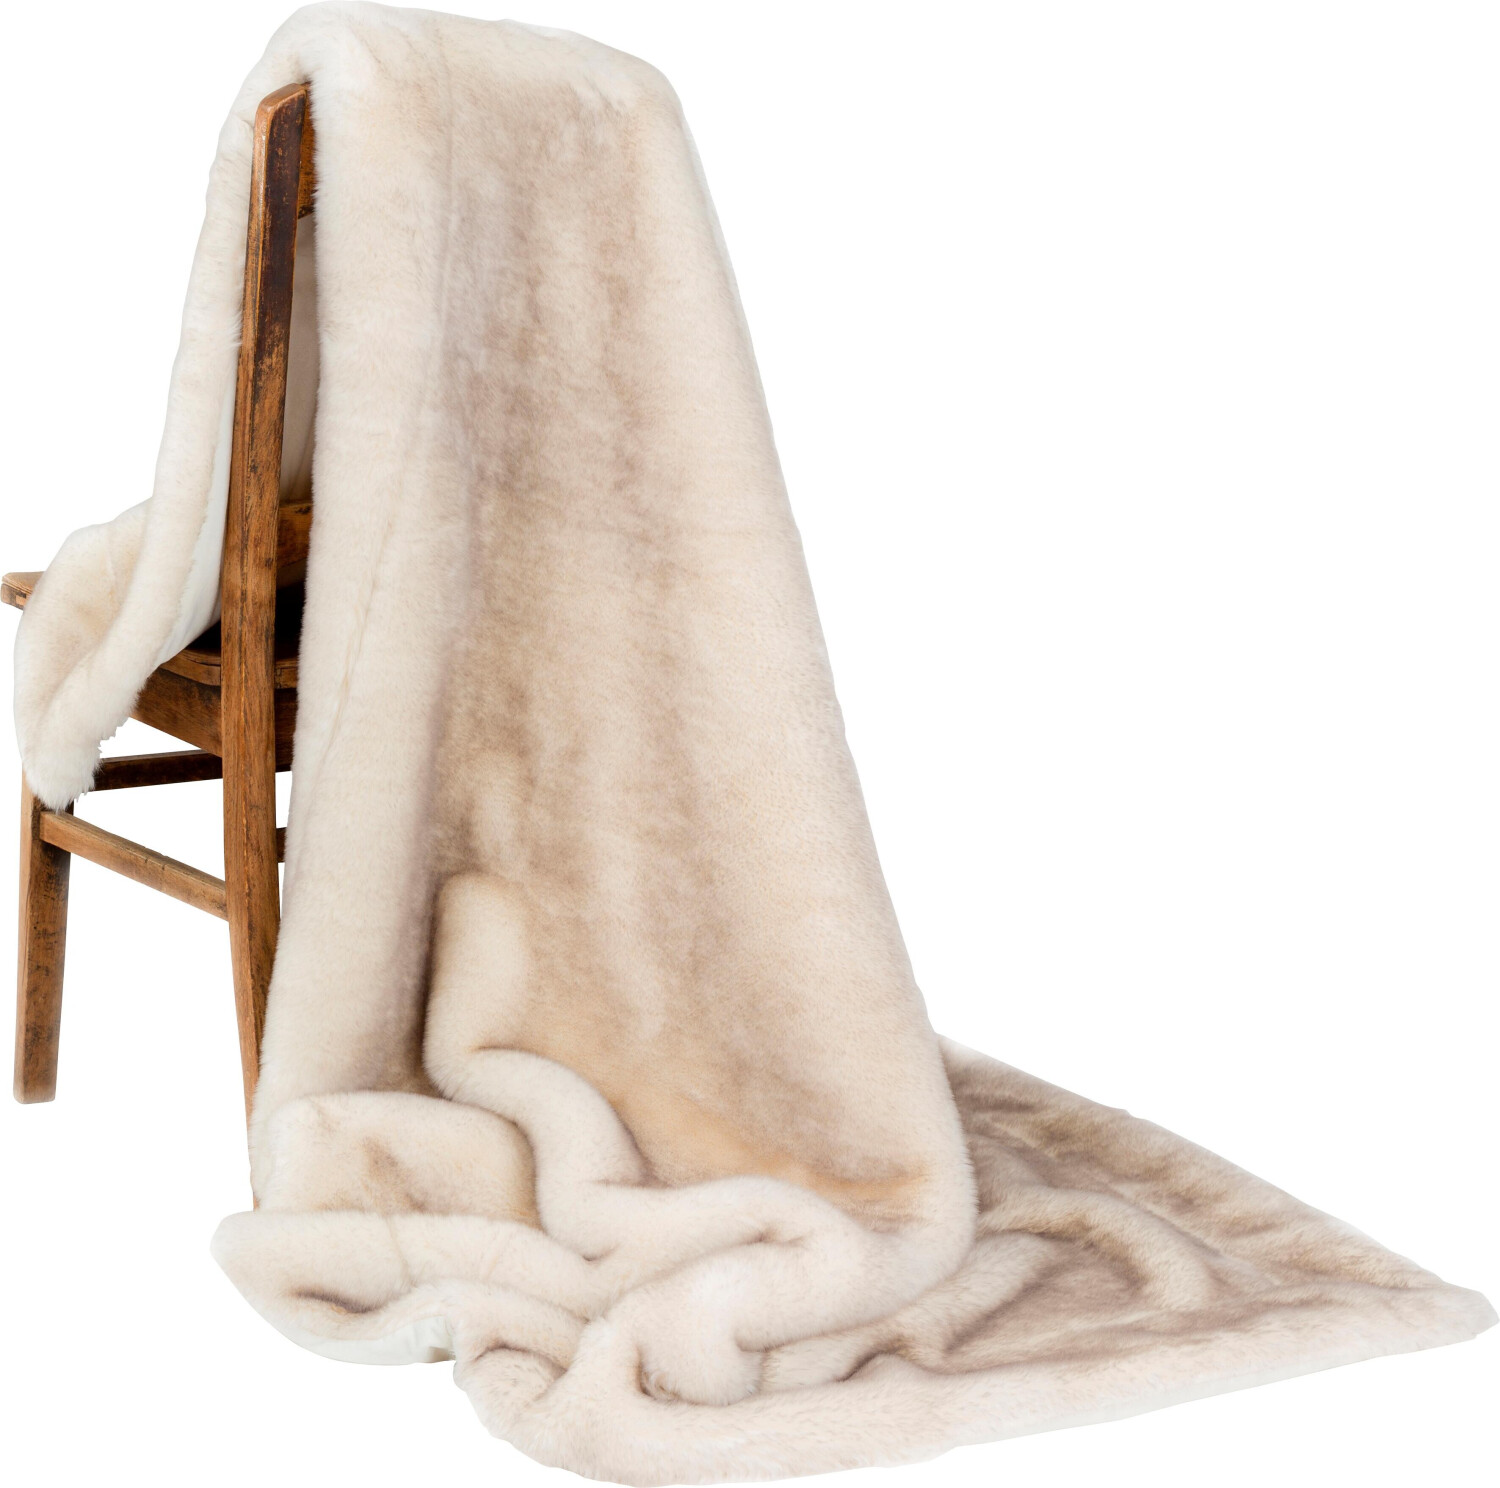 Star Home Textil Wohndecke Polarfuchs 150x200cm weiß ab 194,65 € |  Preisvergleich bei